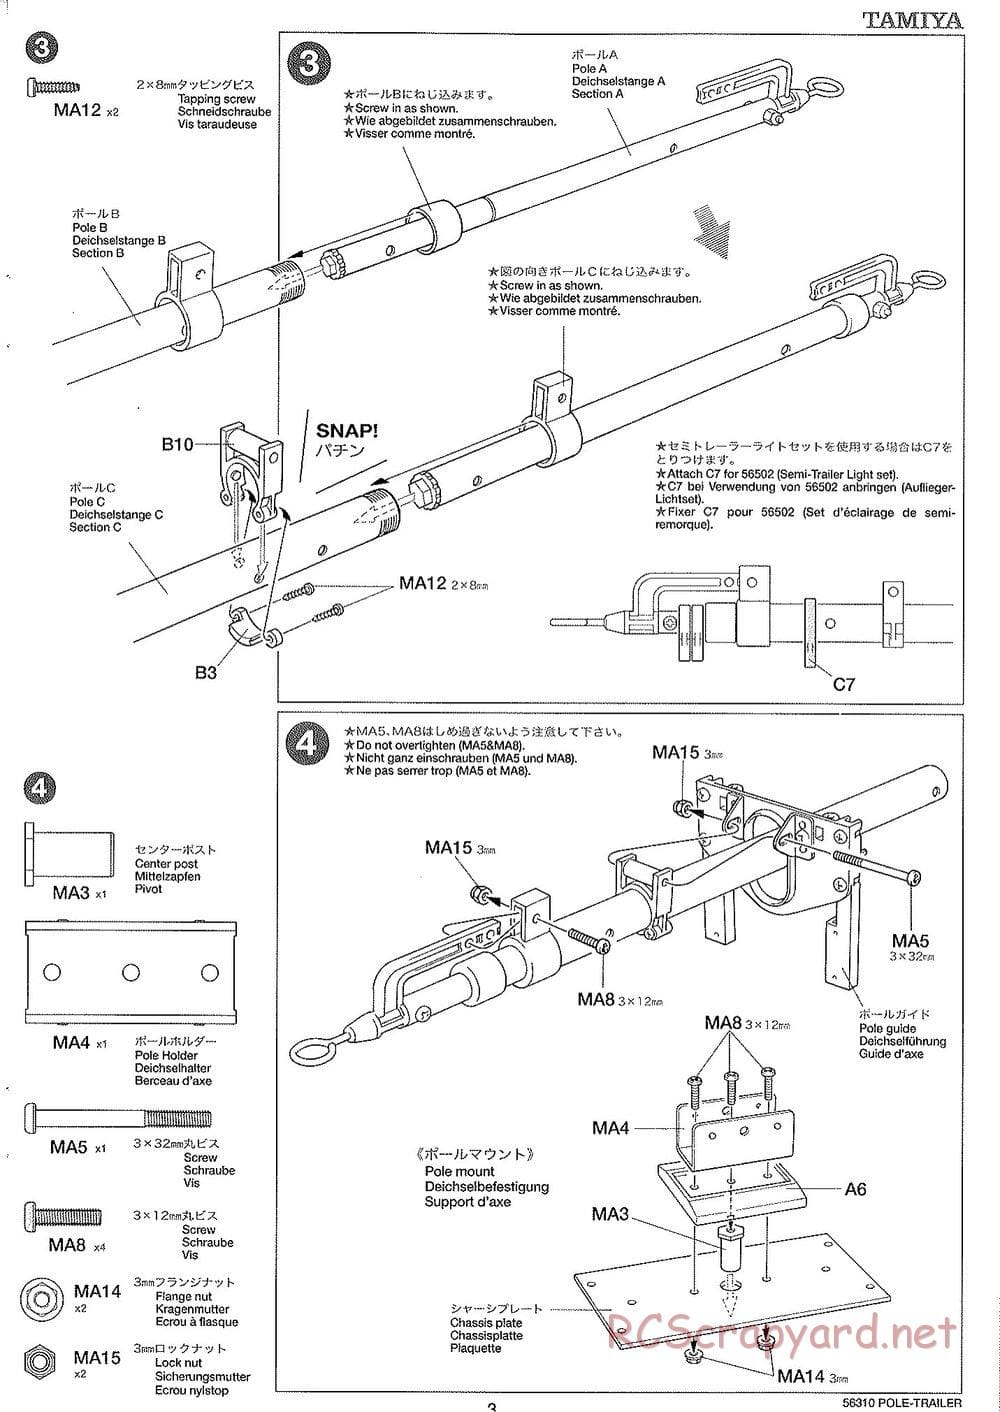 Tamiya - Semi Pole Trailer Chassis - Manual - Page 3